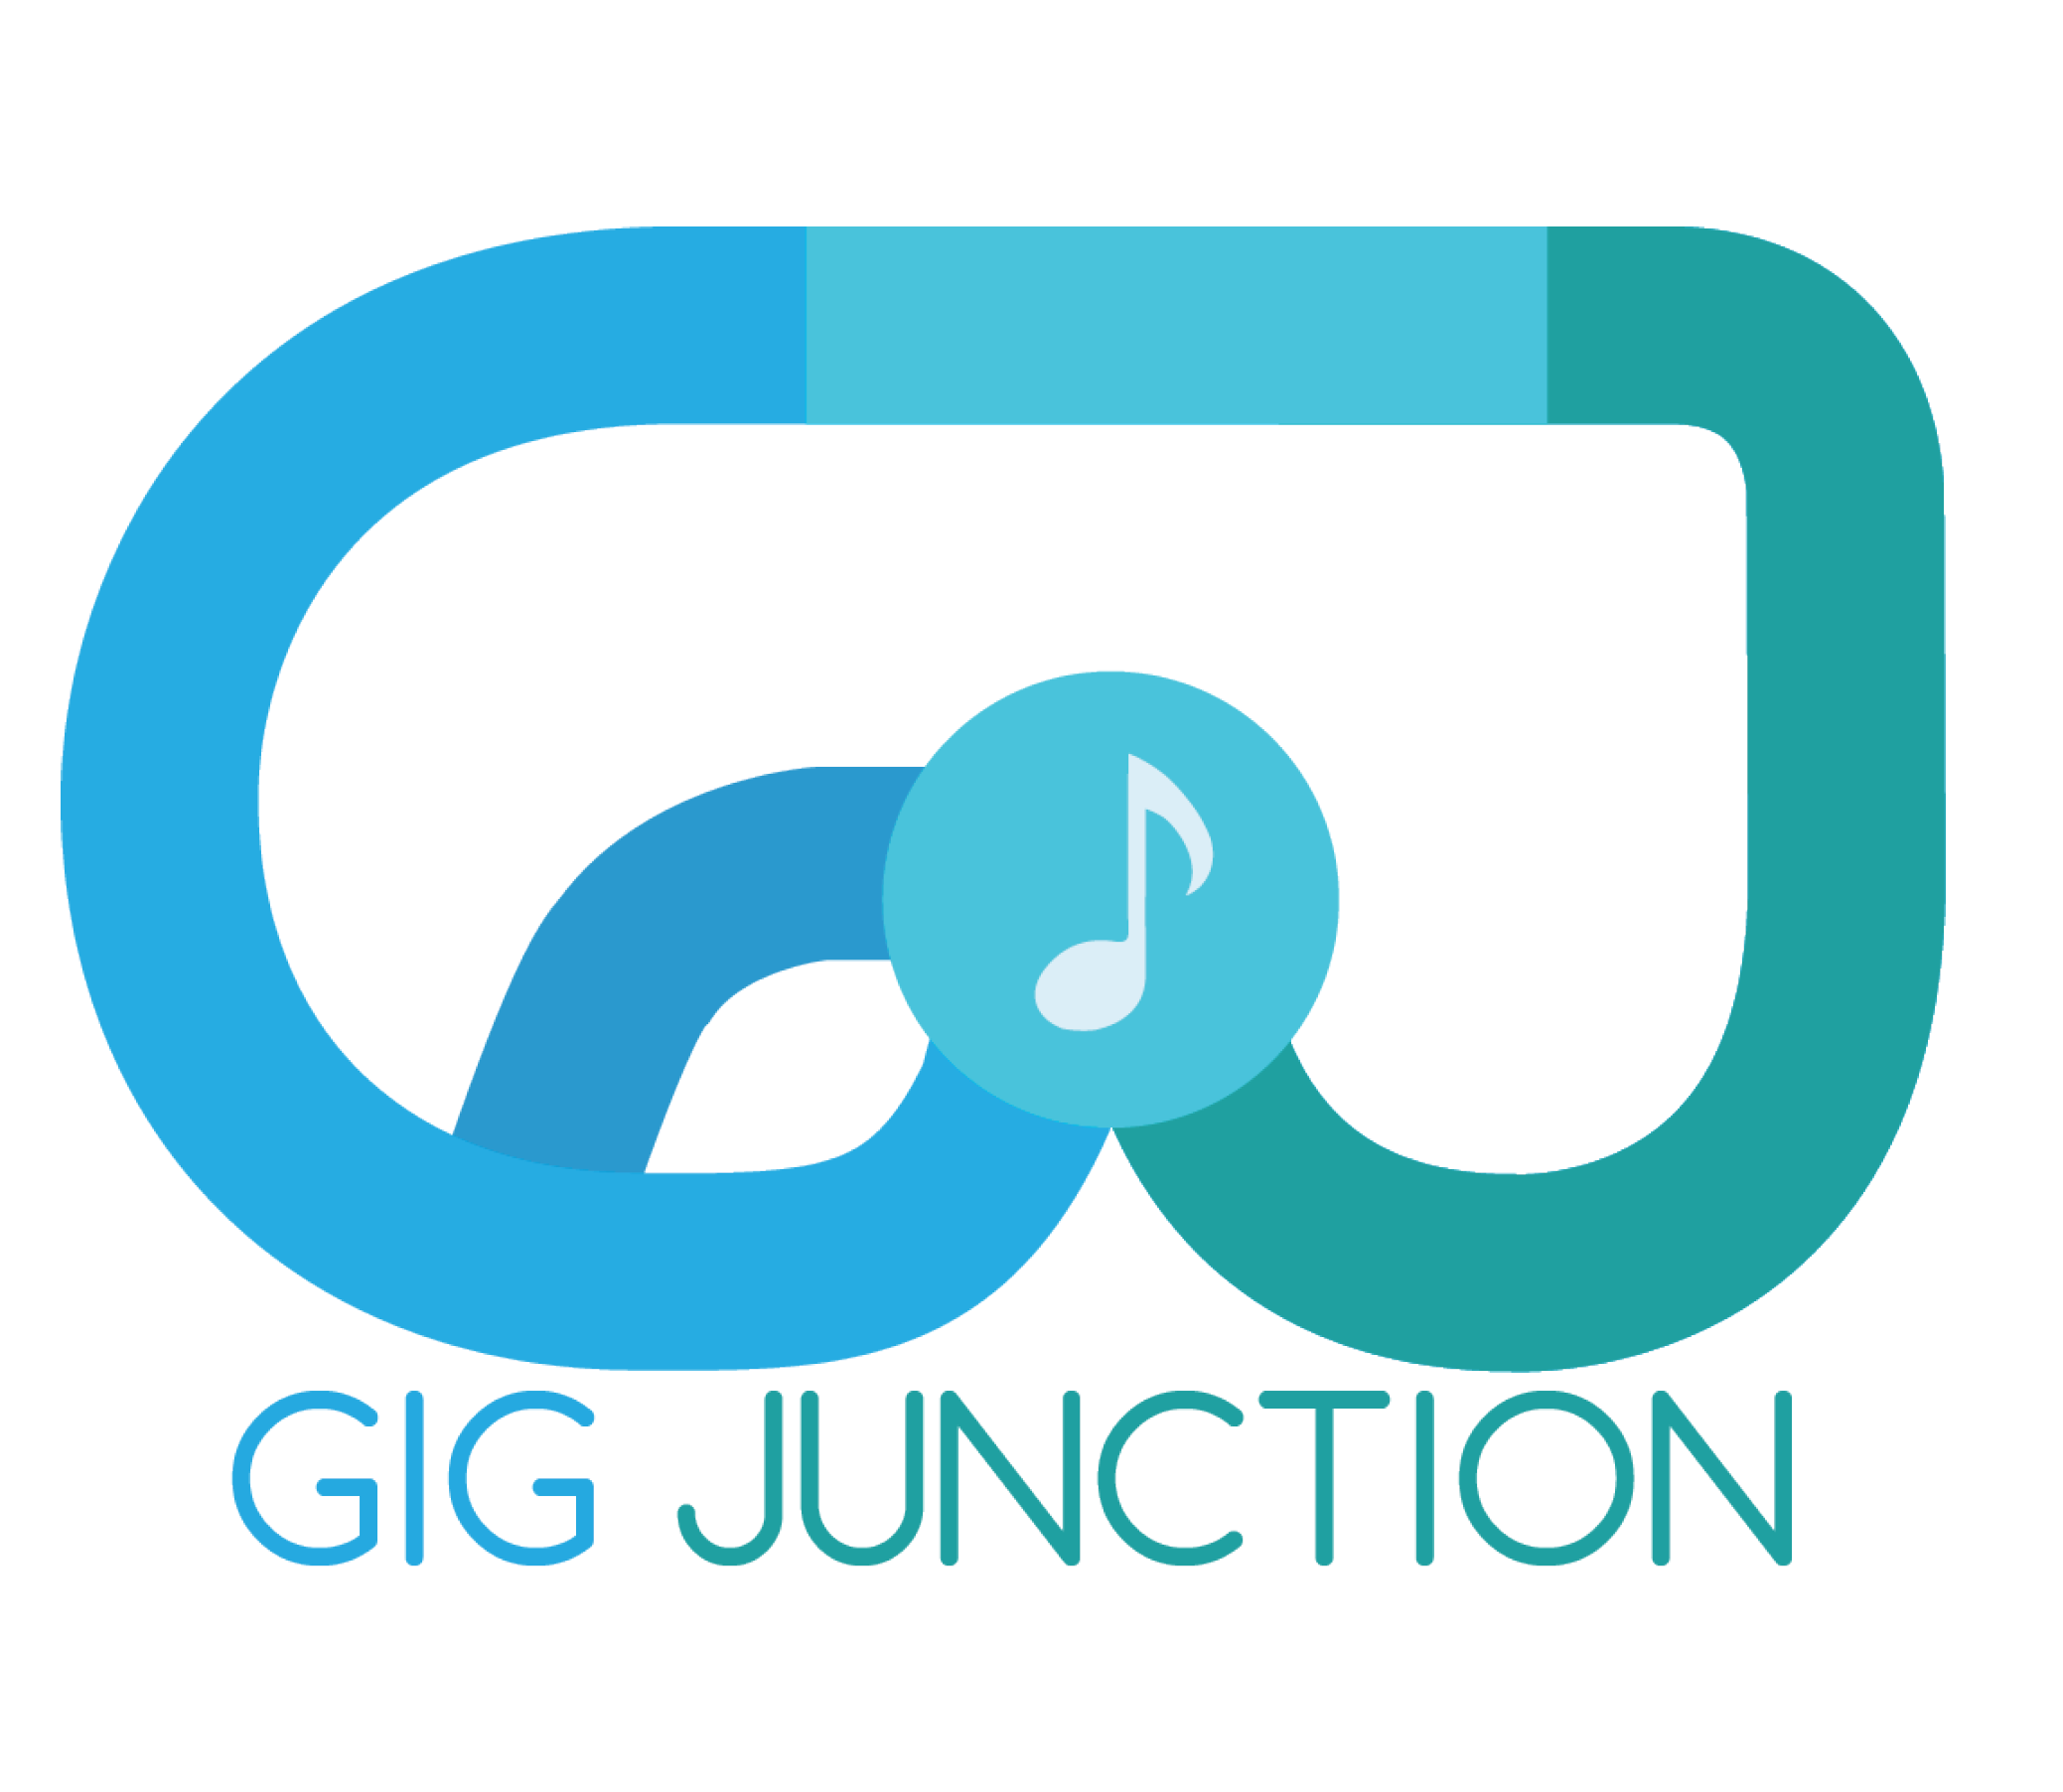 Gig Junction logo